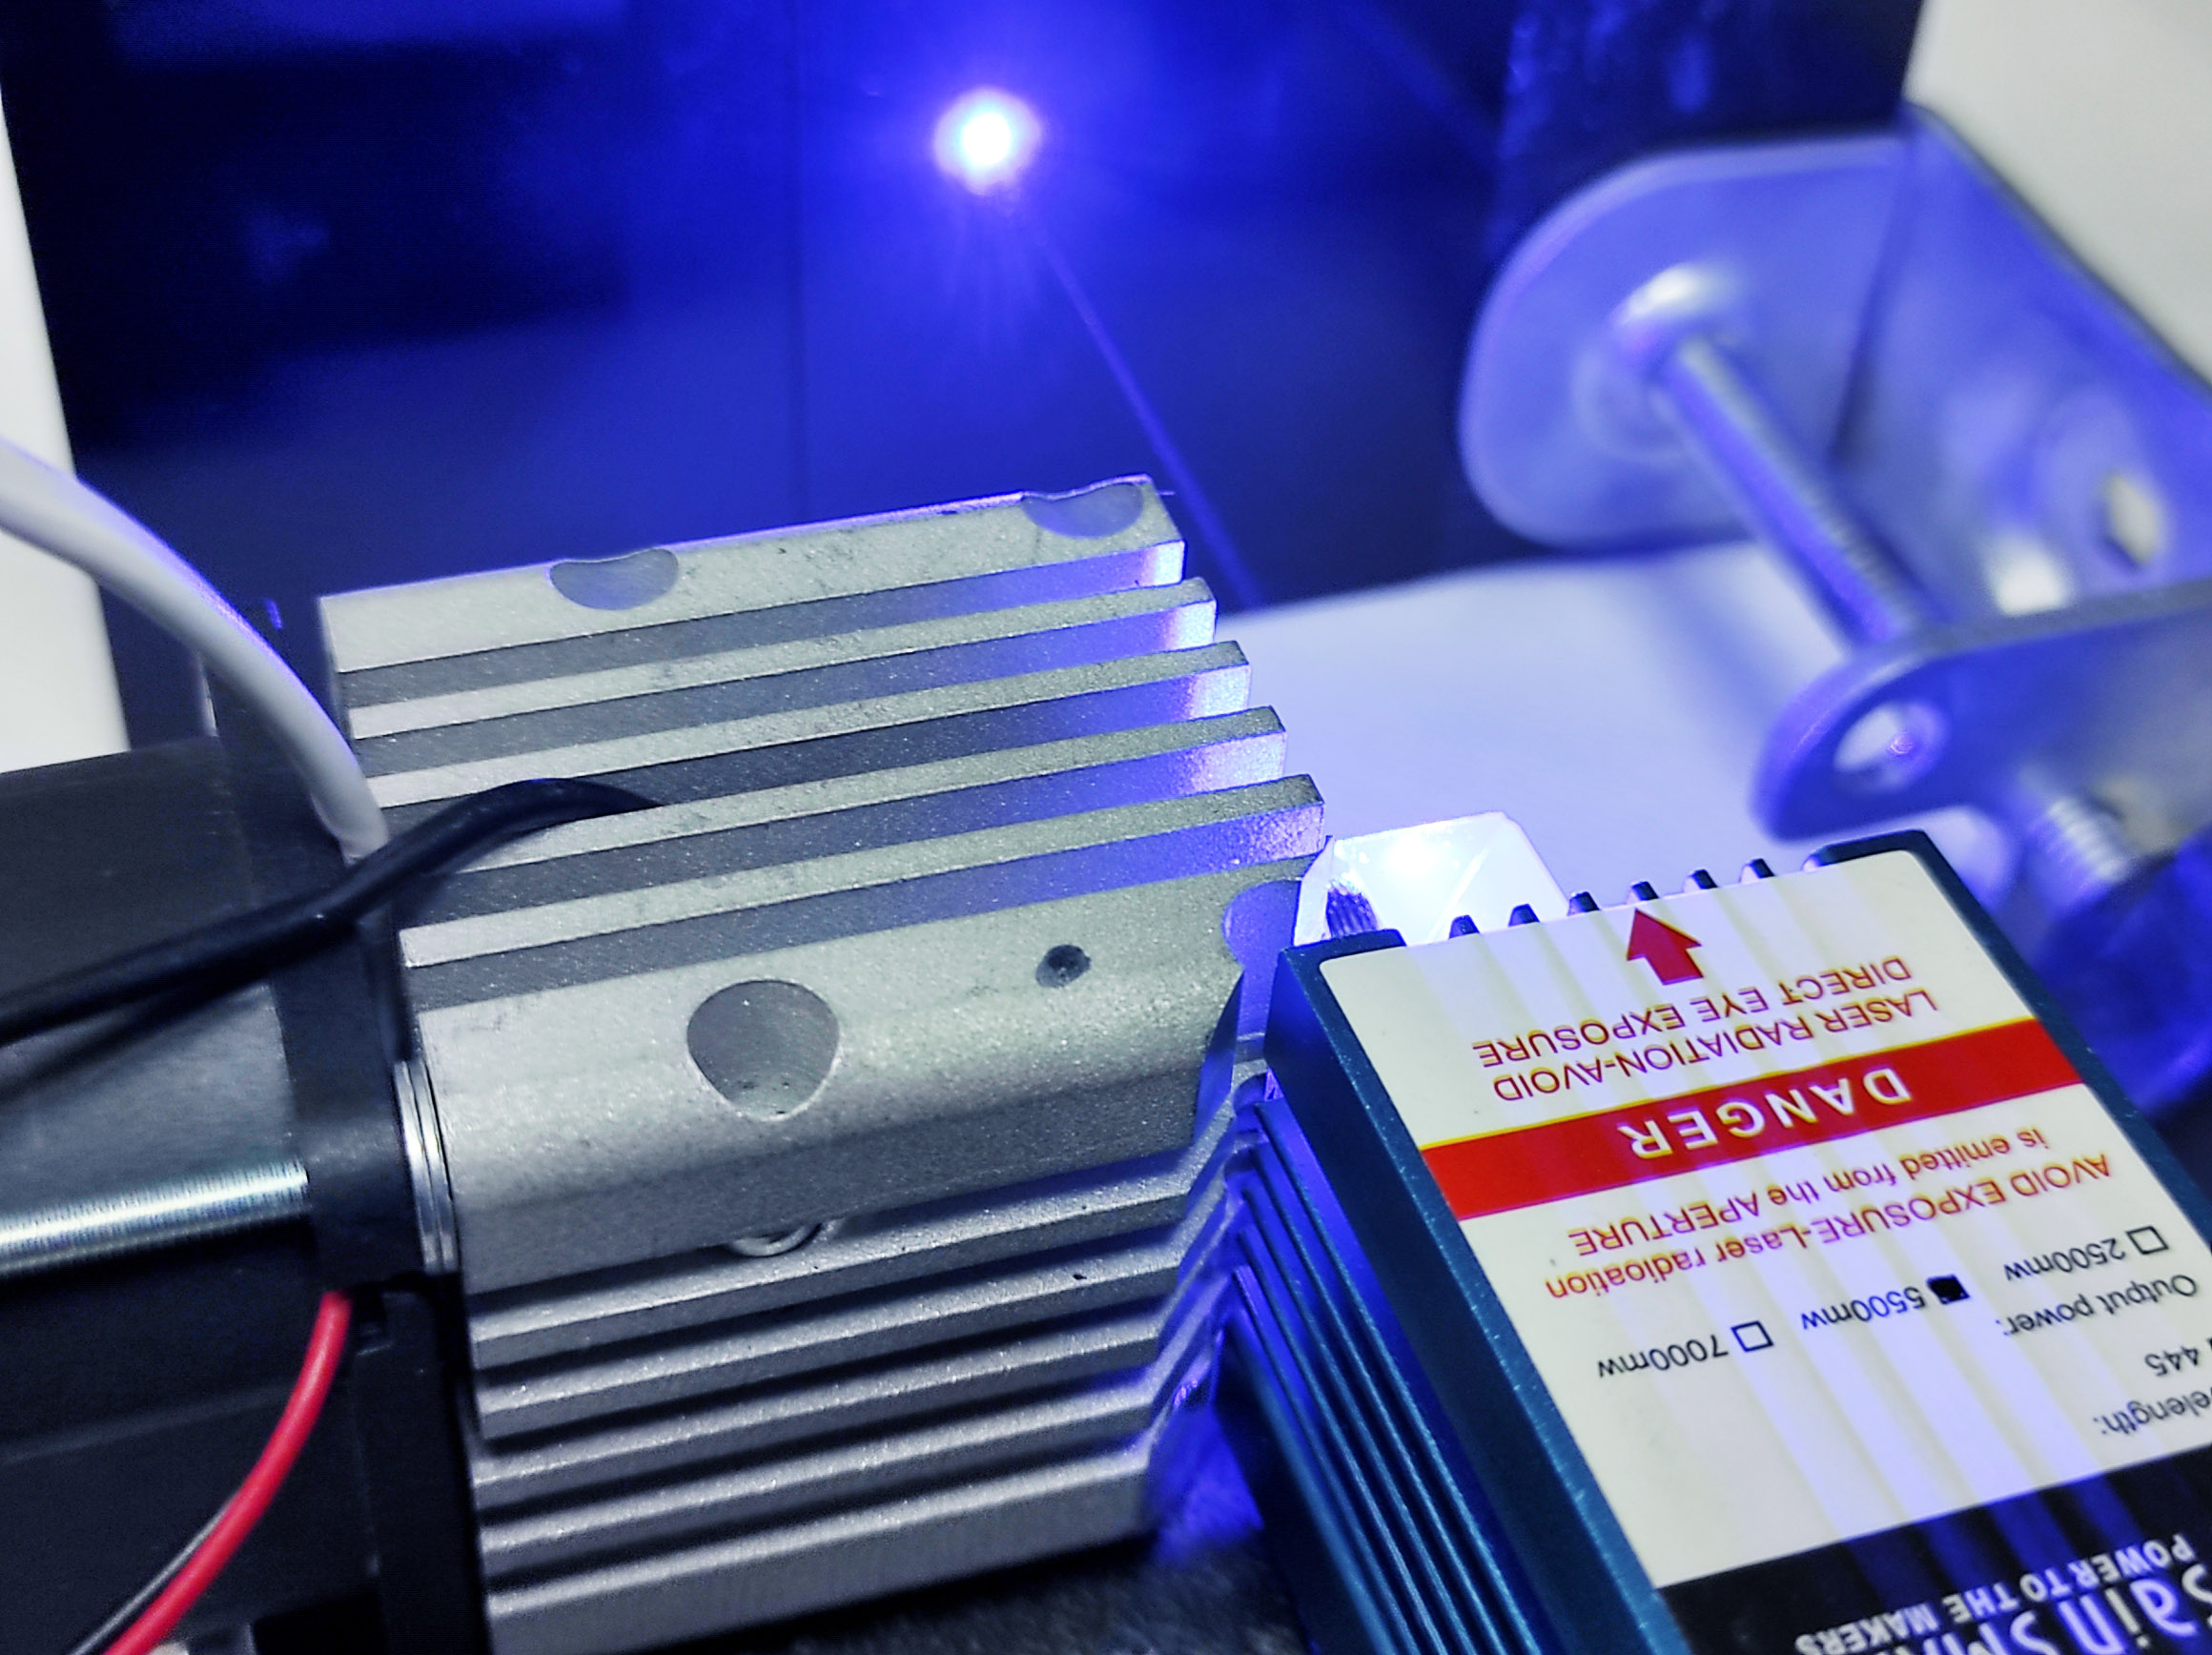 Phasing laser diodes